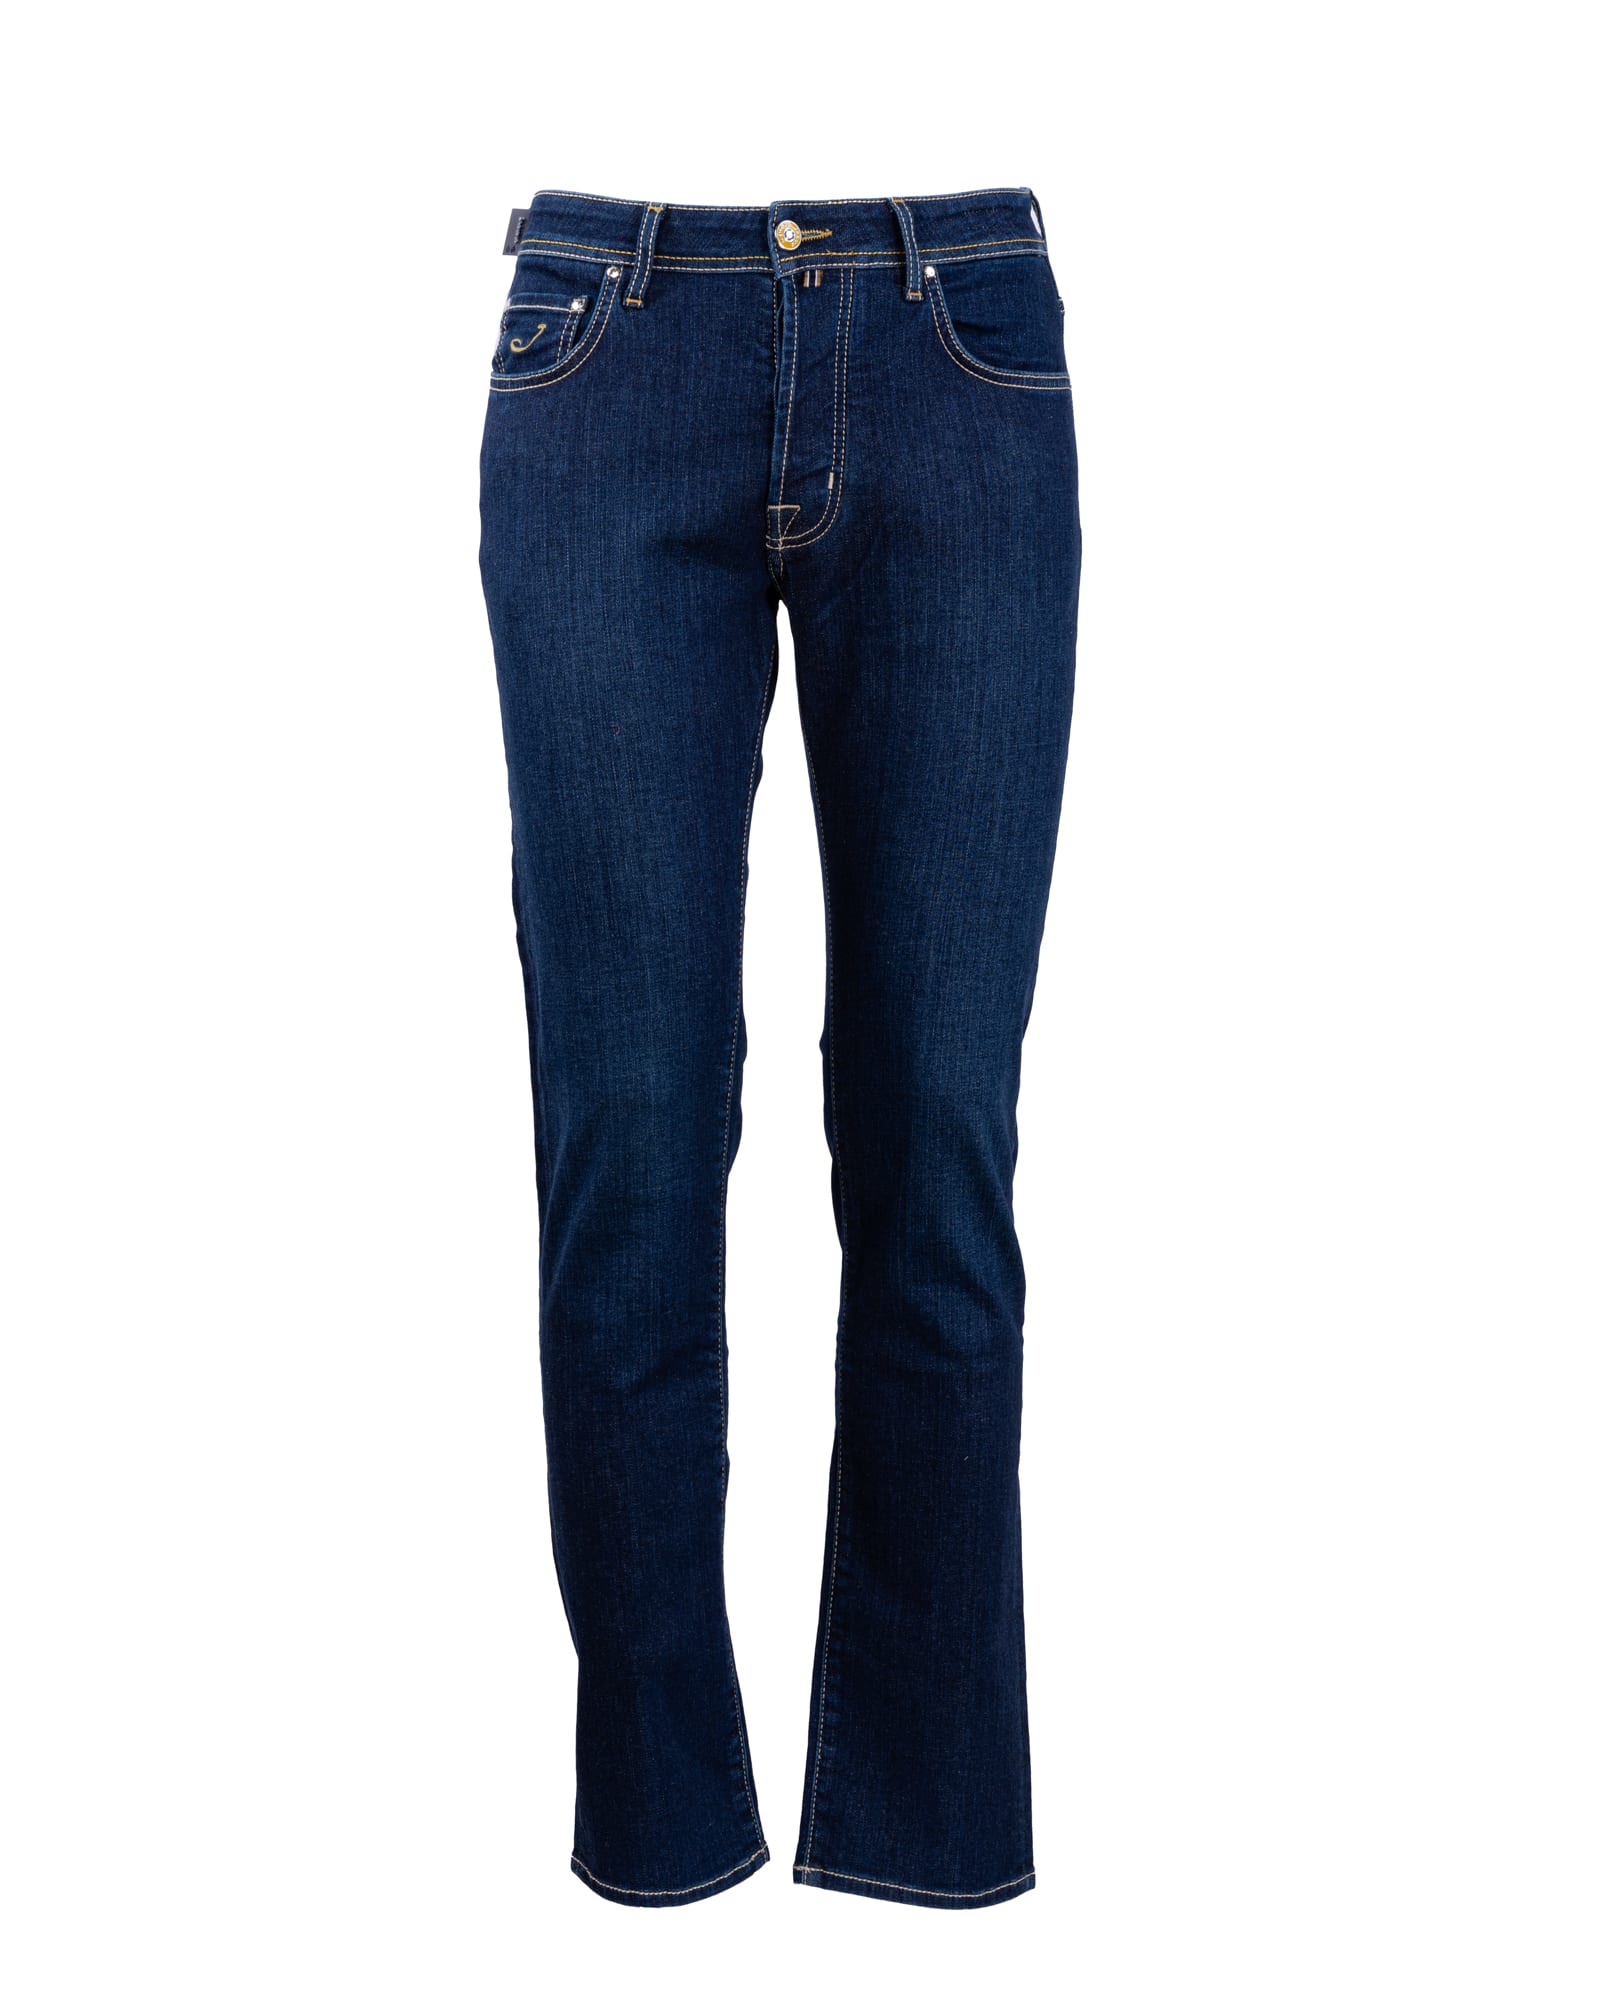 Jacob Cohen Dark blue denim jeans model Bard